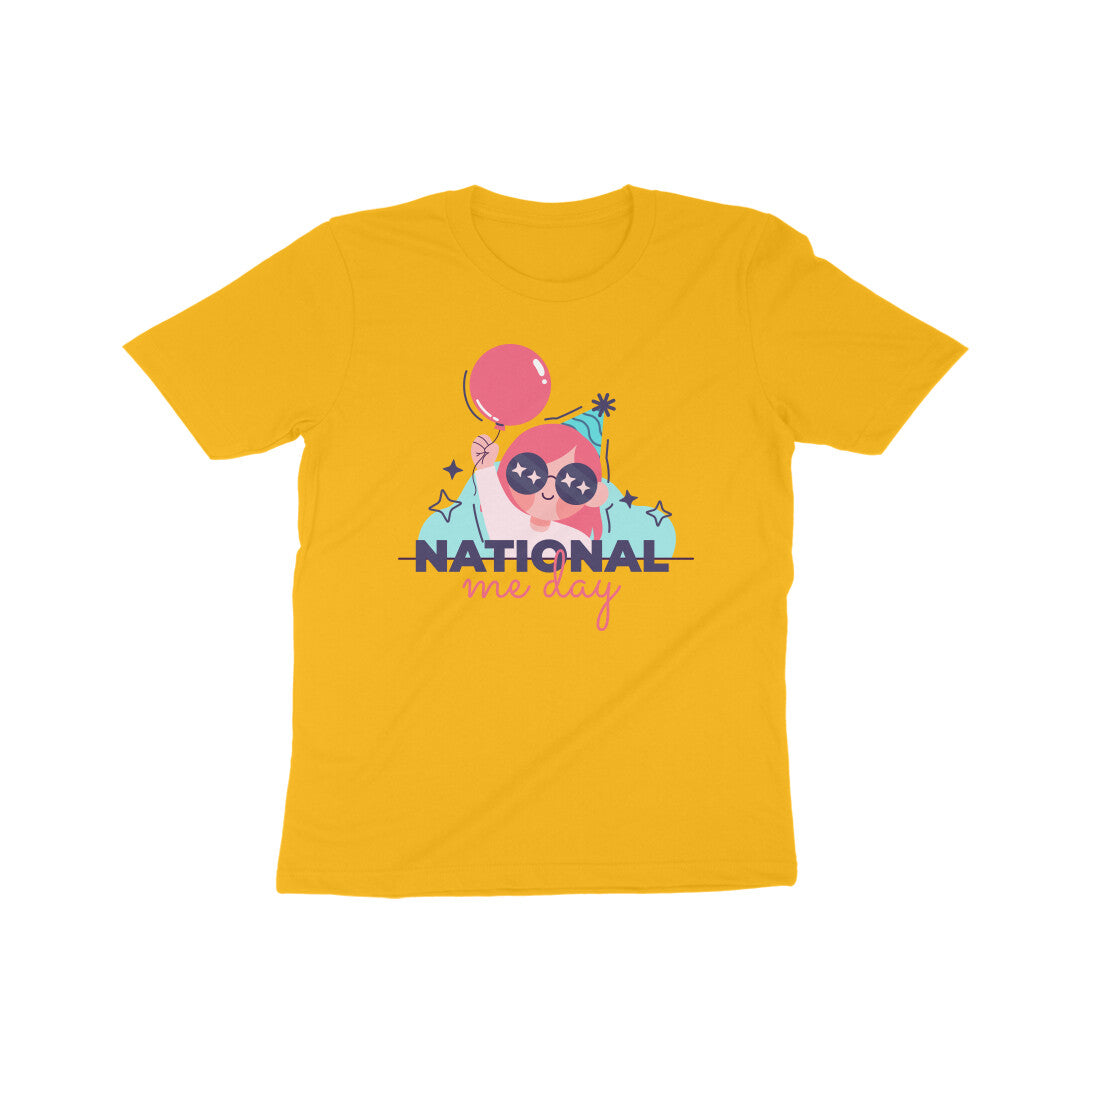 National Me Day Kids T-Shirt